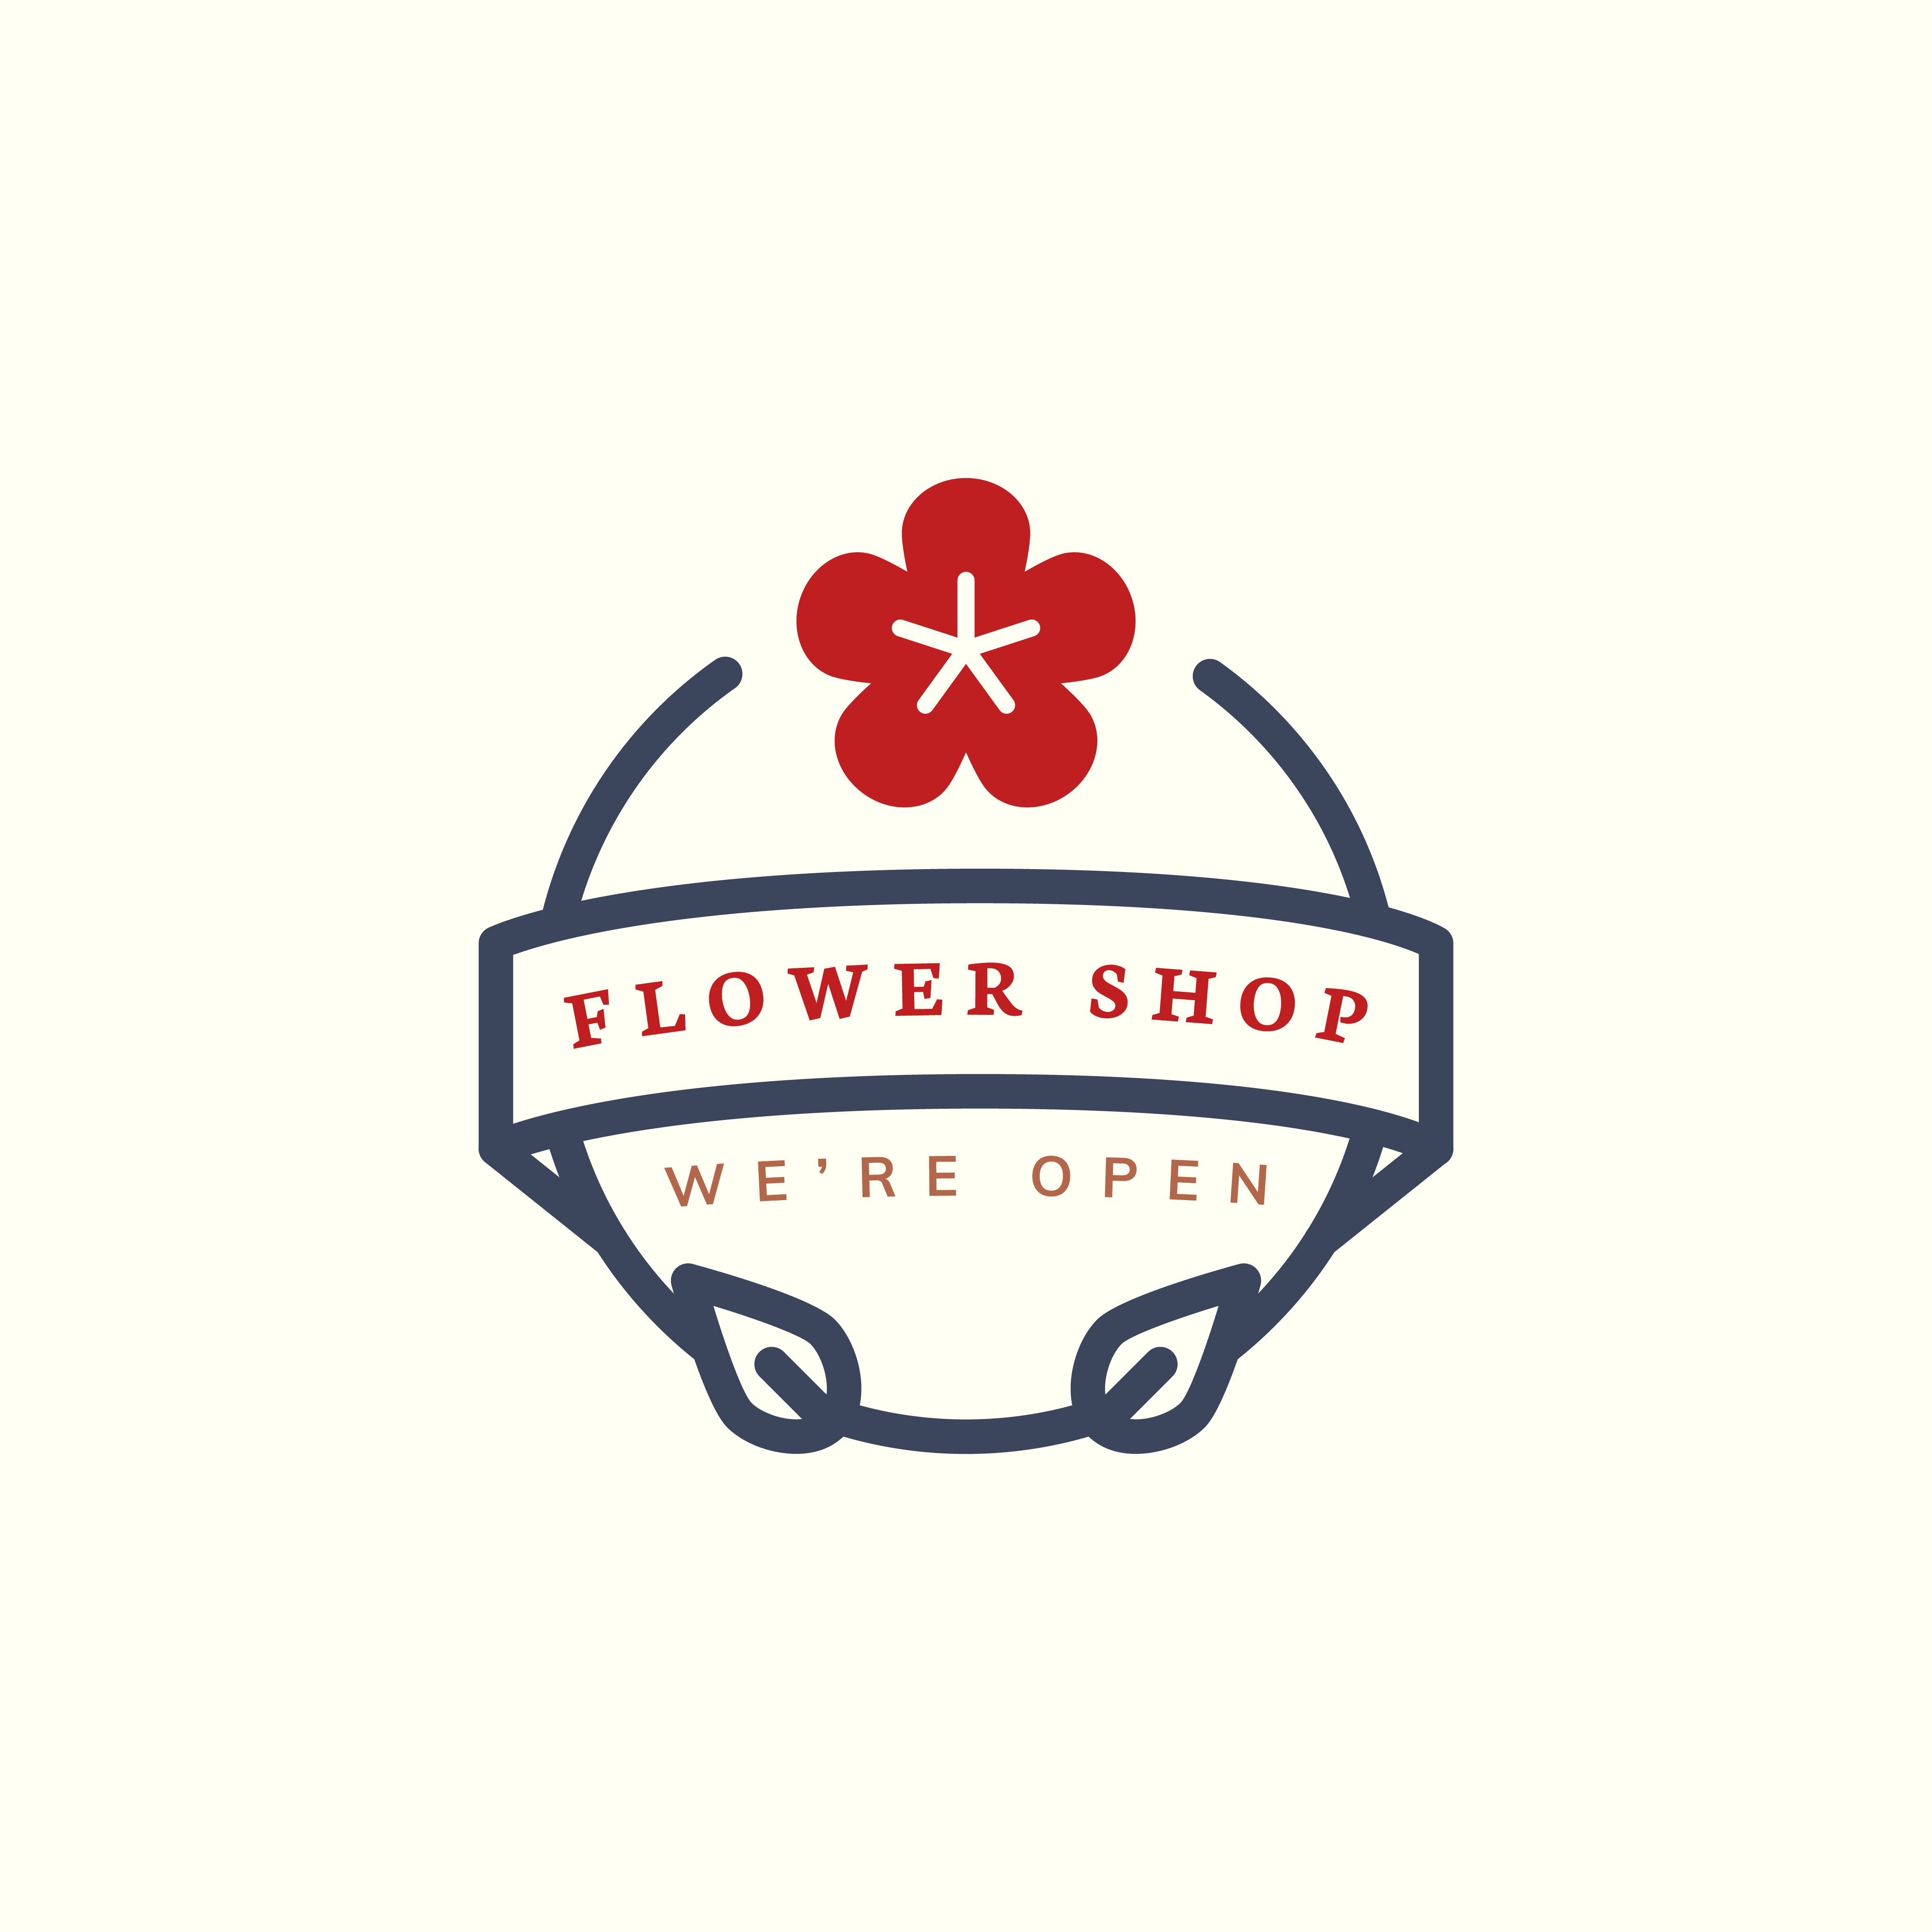 Download Flower shop logo design vector - Download Free Vectors ...